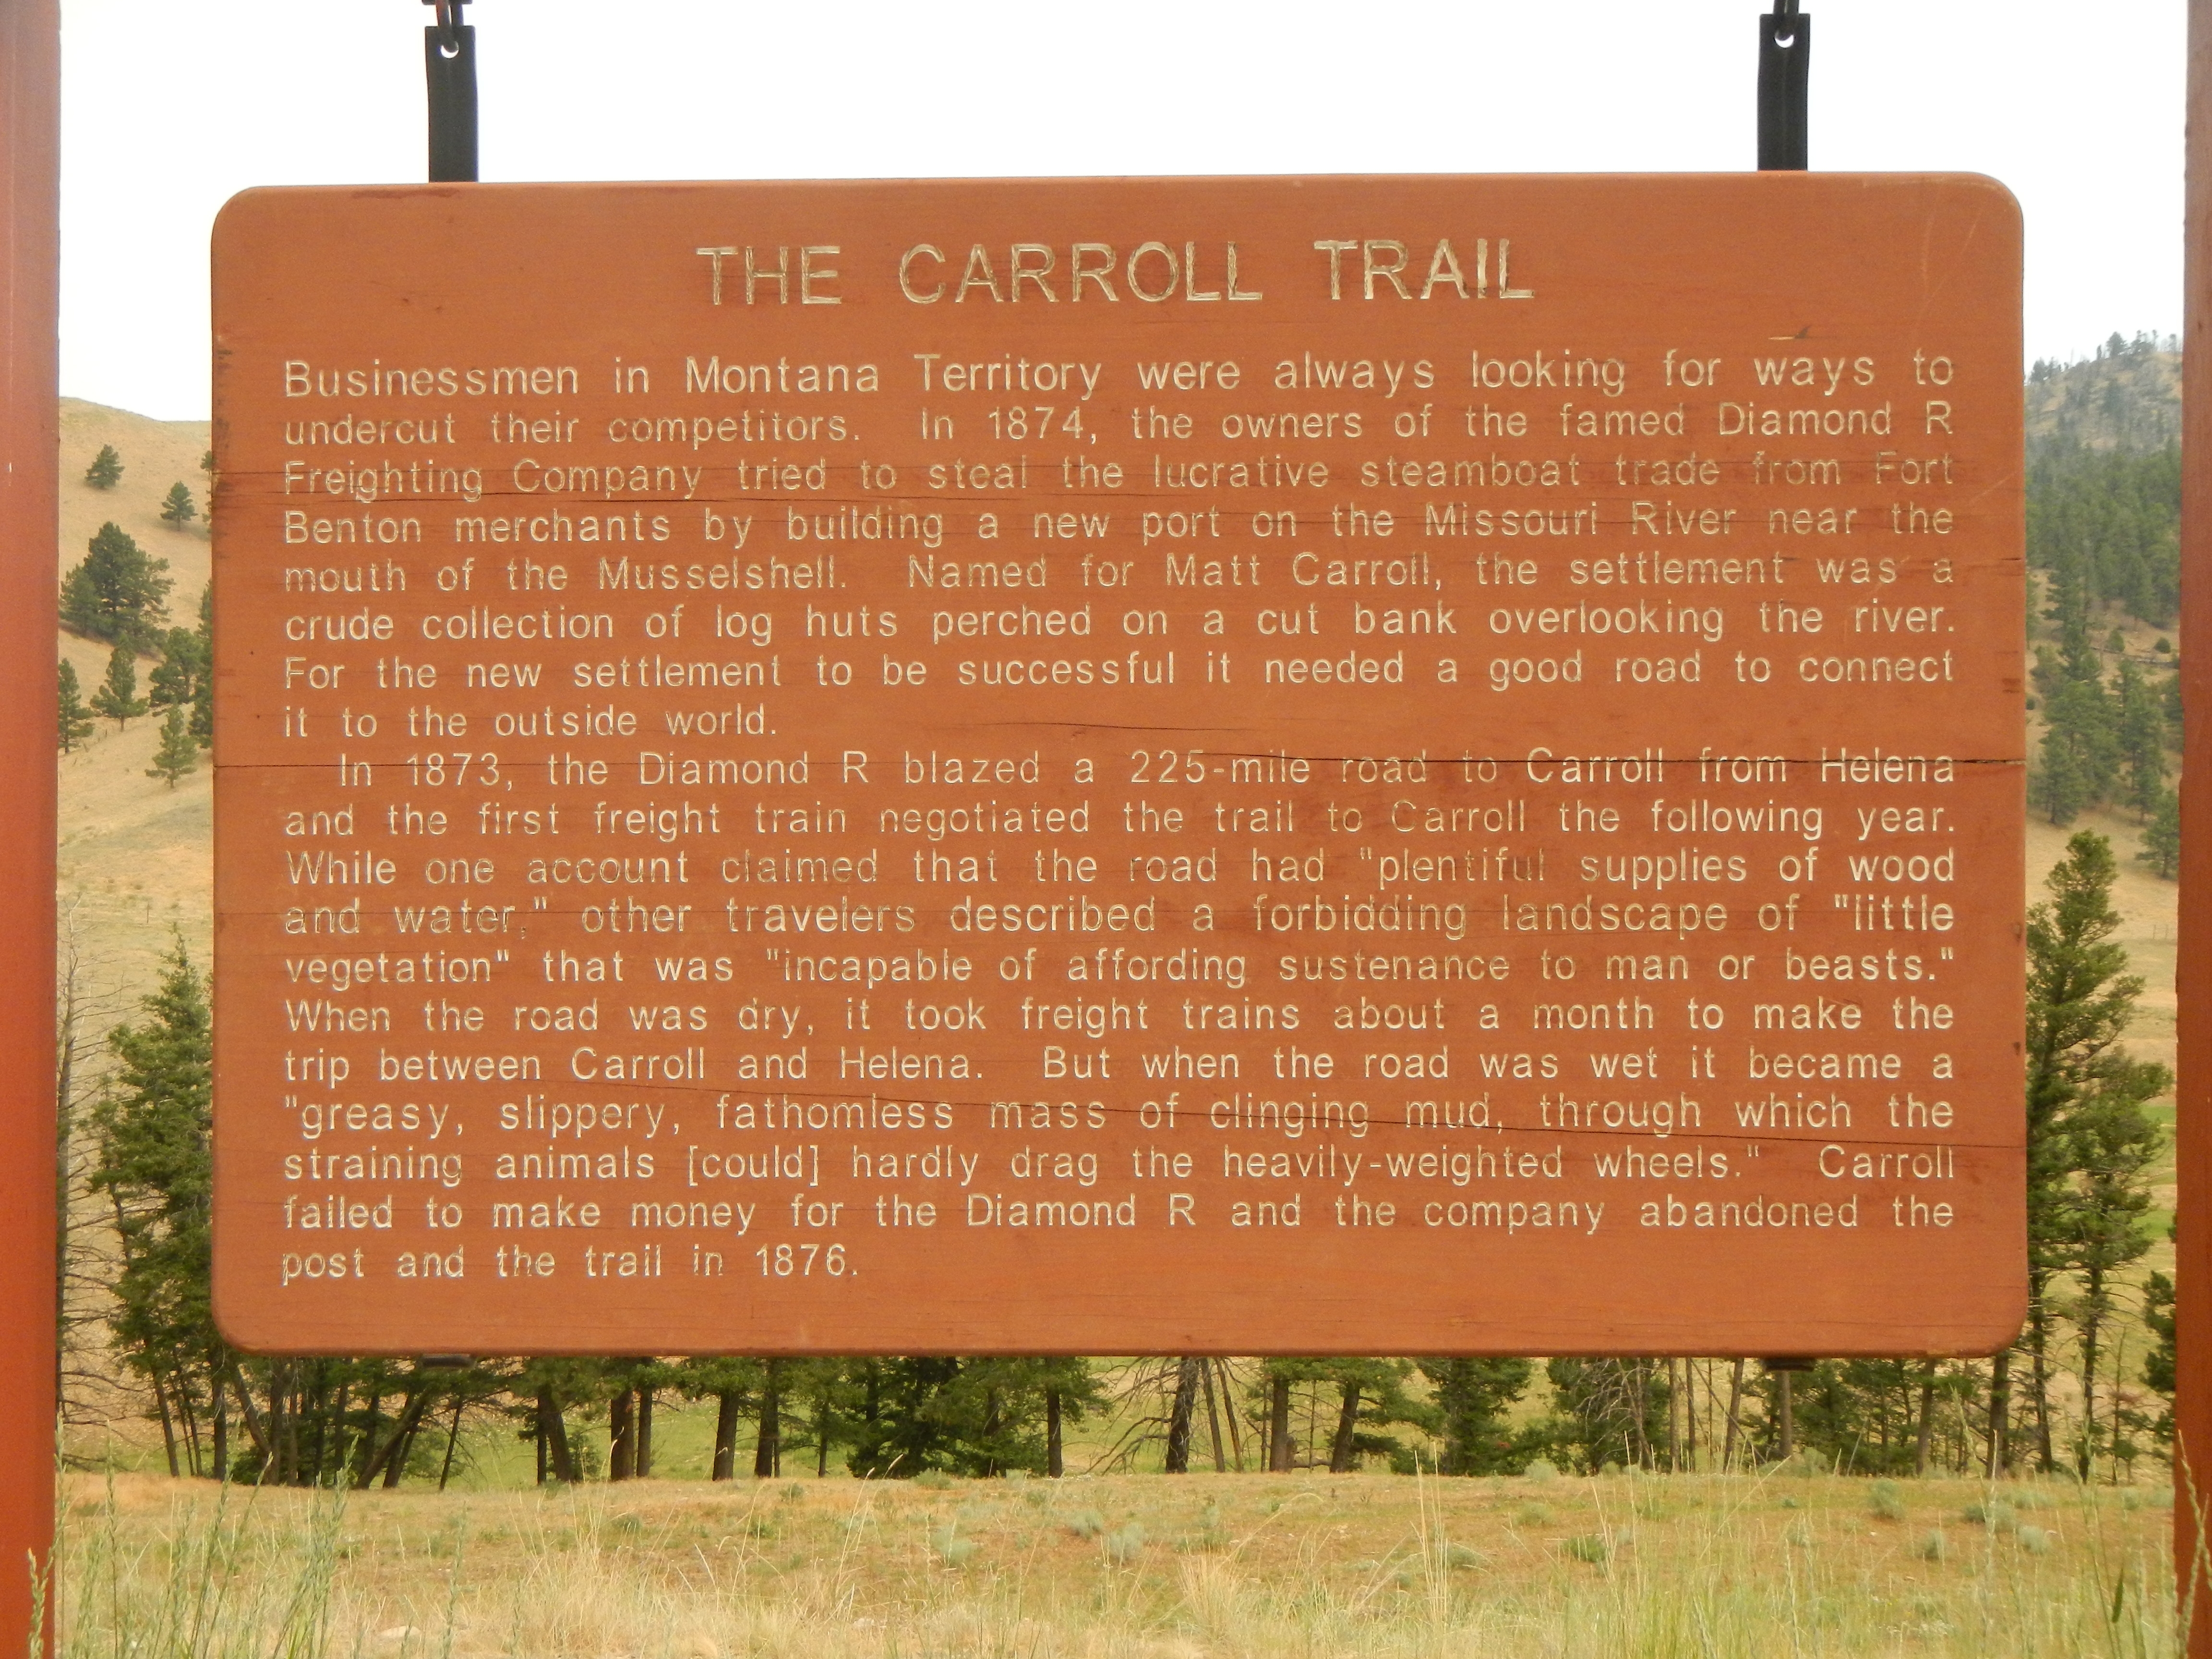 The Carroll Trail Marker